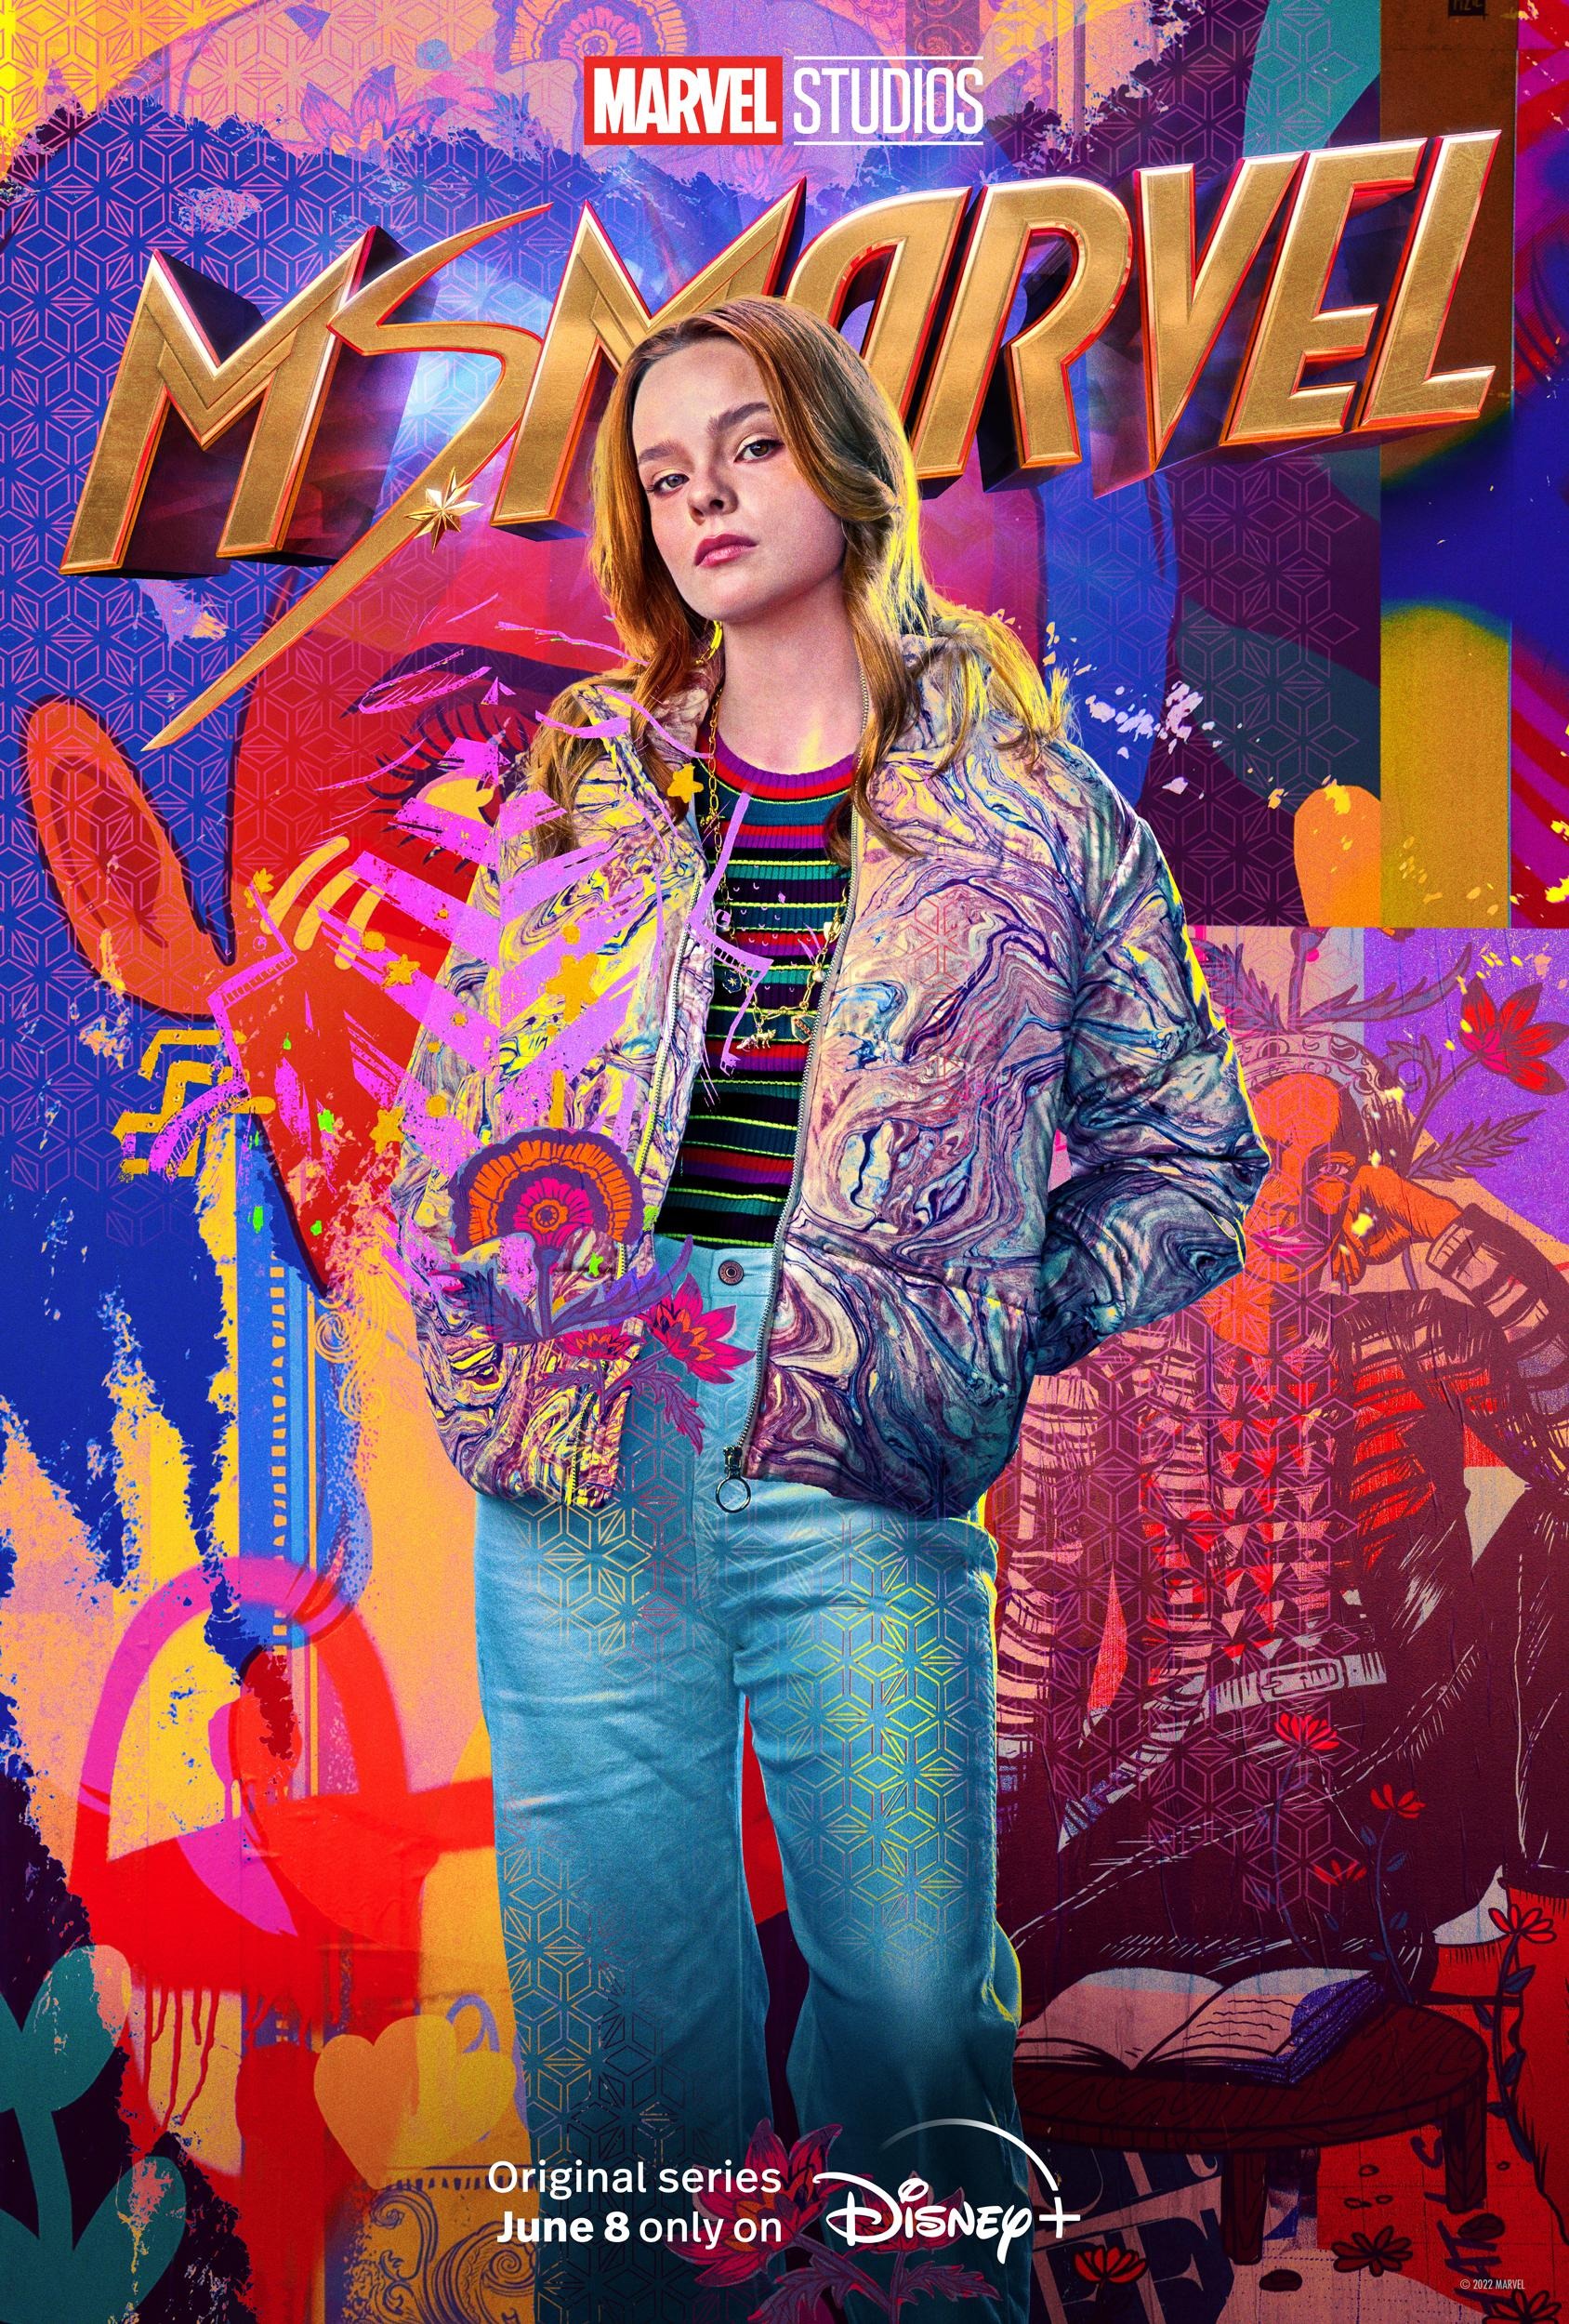 Mega Sized TV Poster Image for Ms. Marvel (#8 of 12)